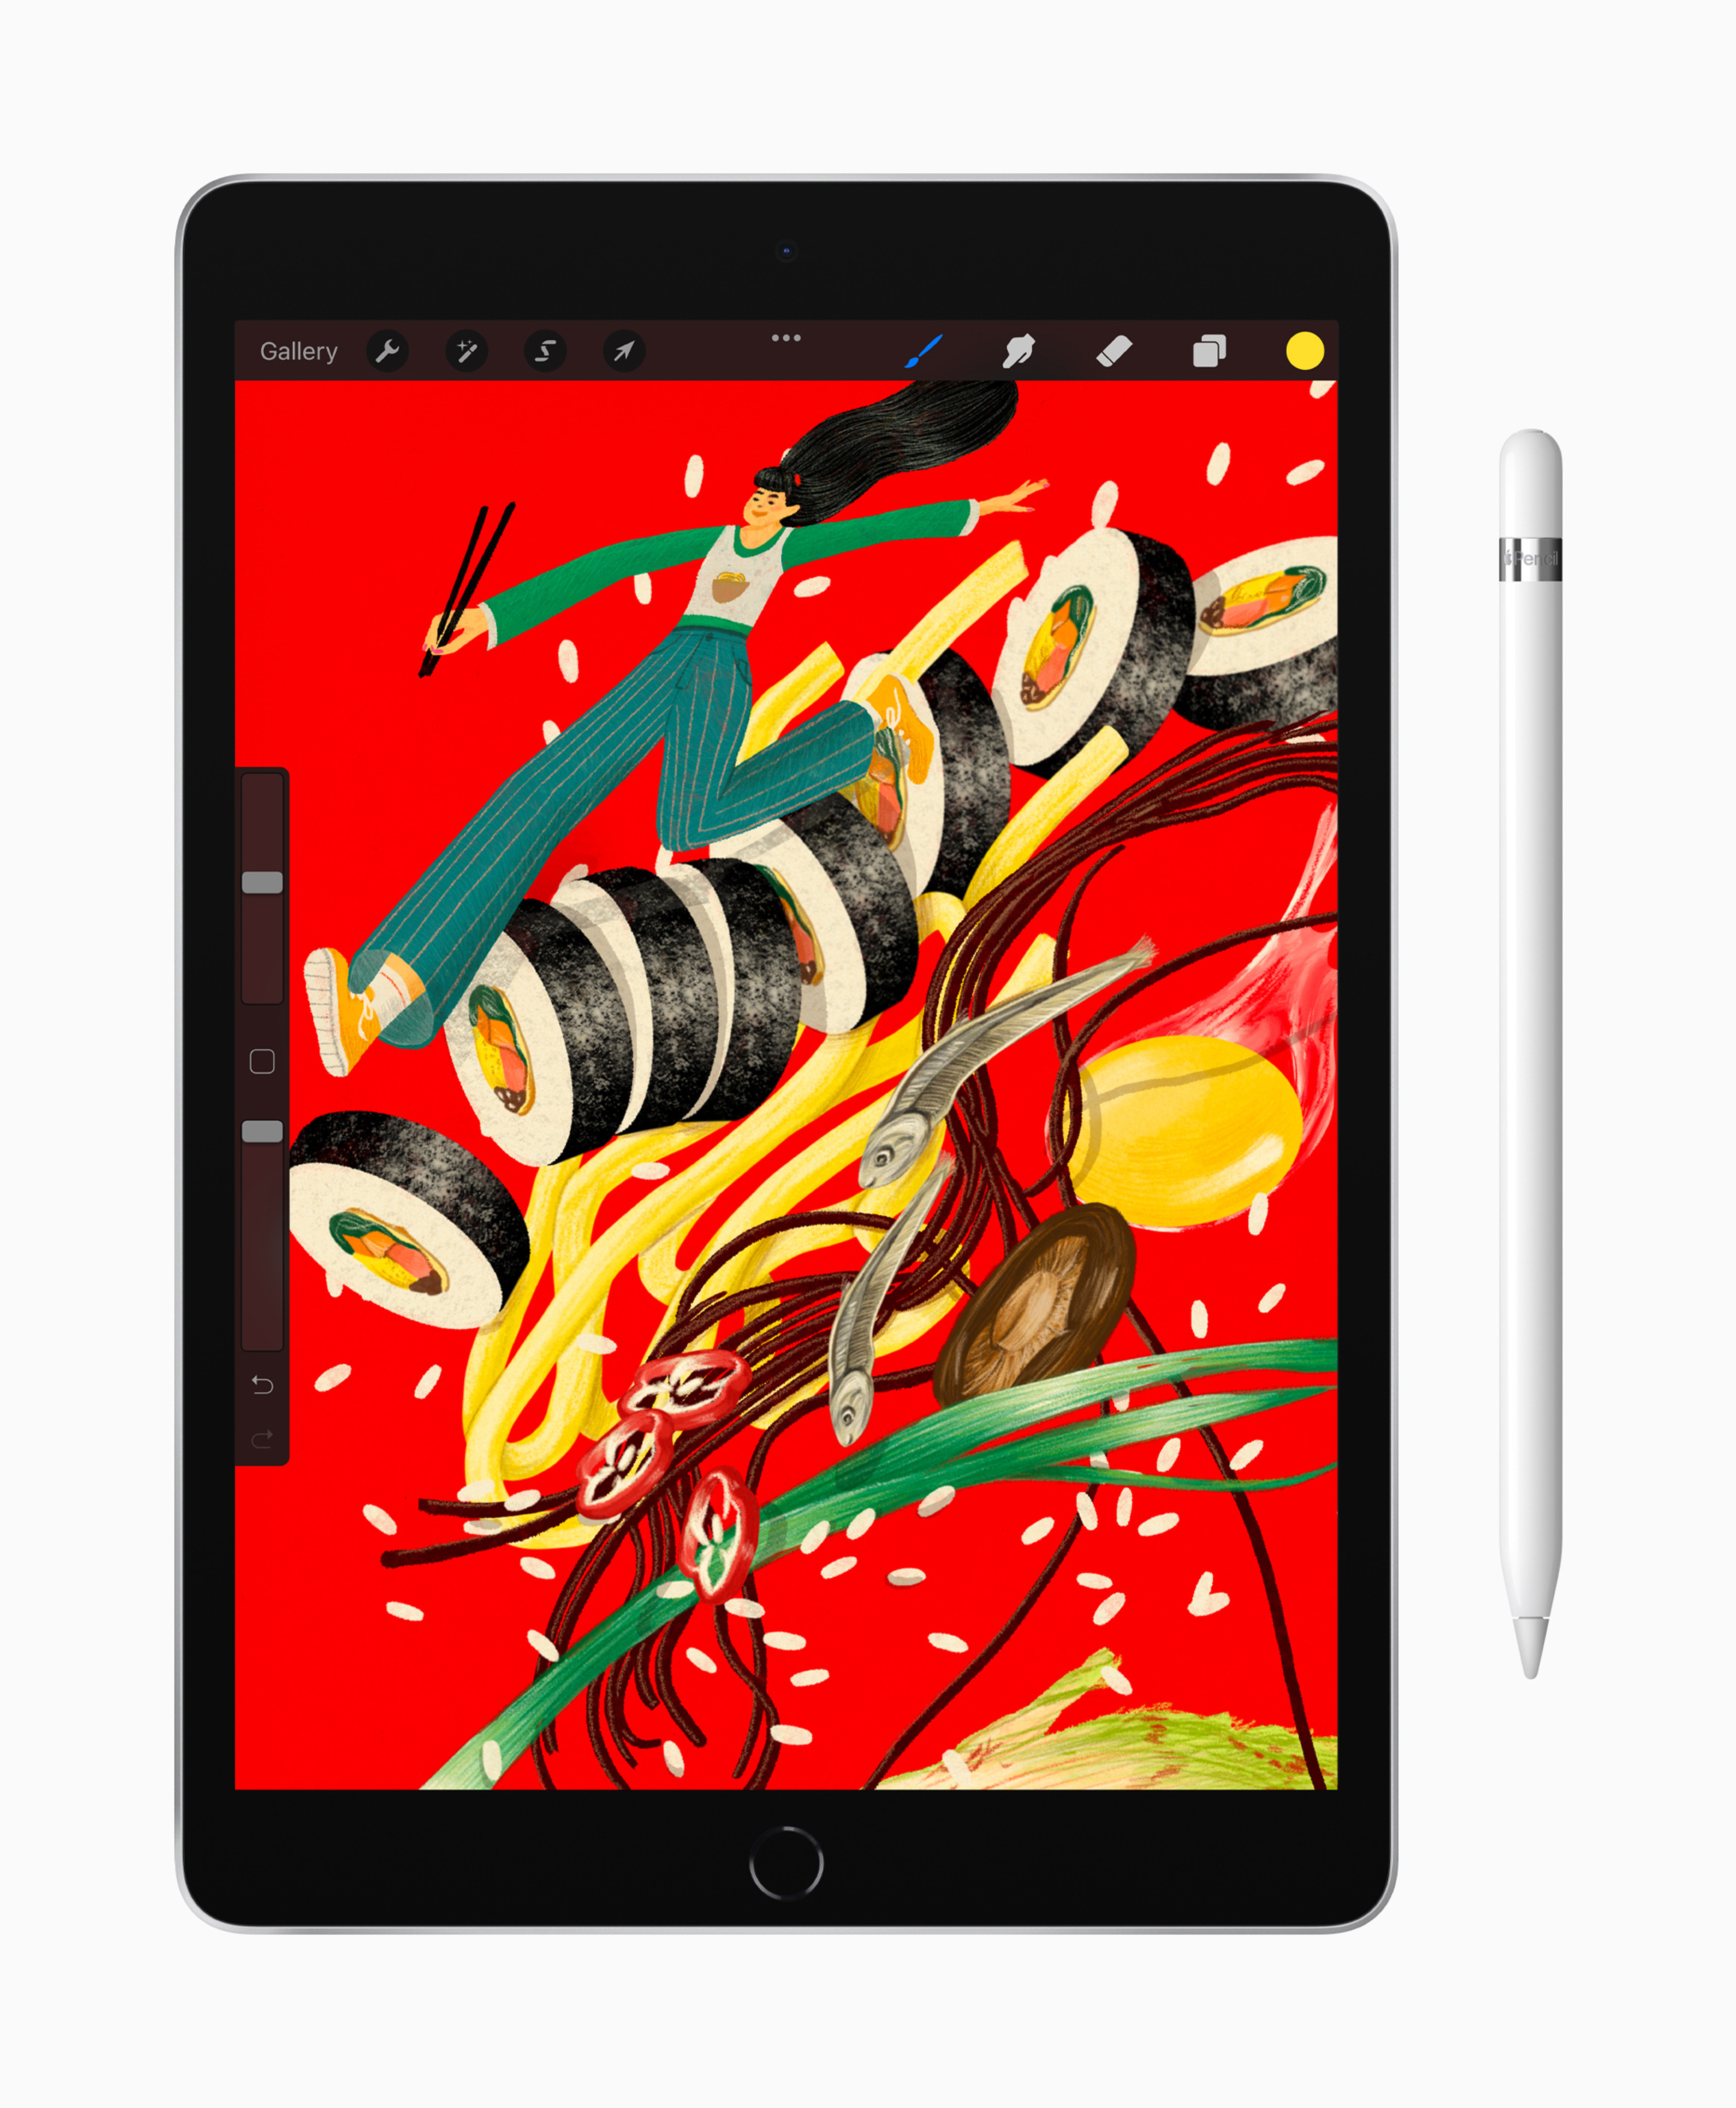 Apple iPad 第9世代 A13 Bionic 10.2型 Wi-Fi …-